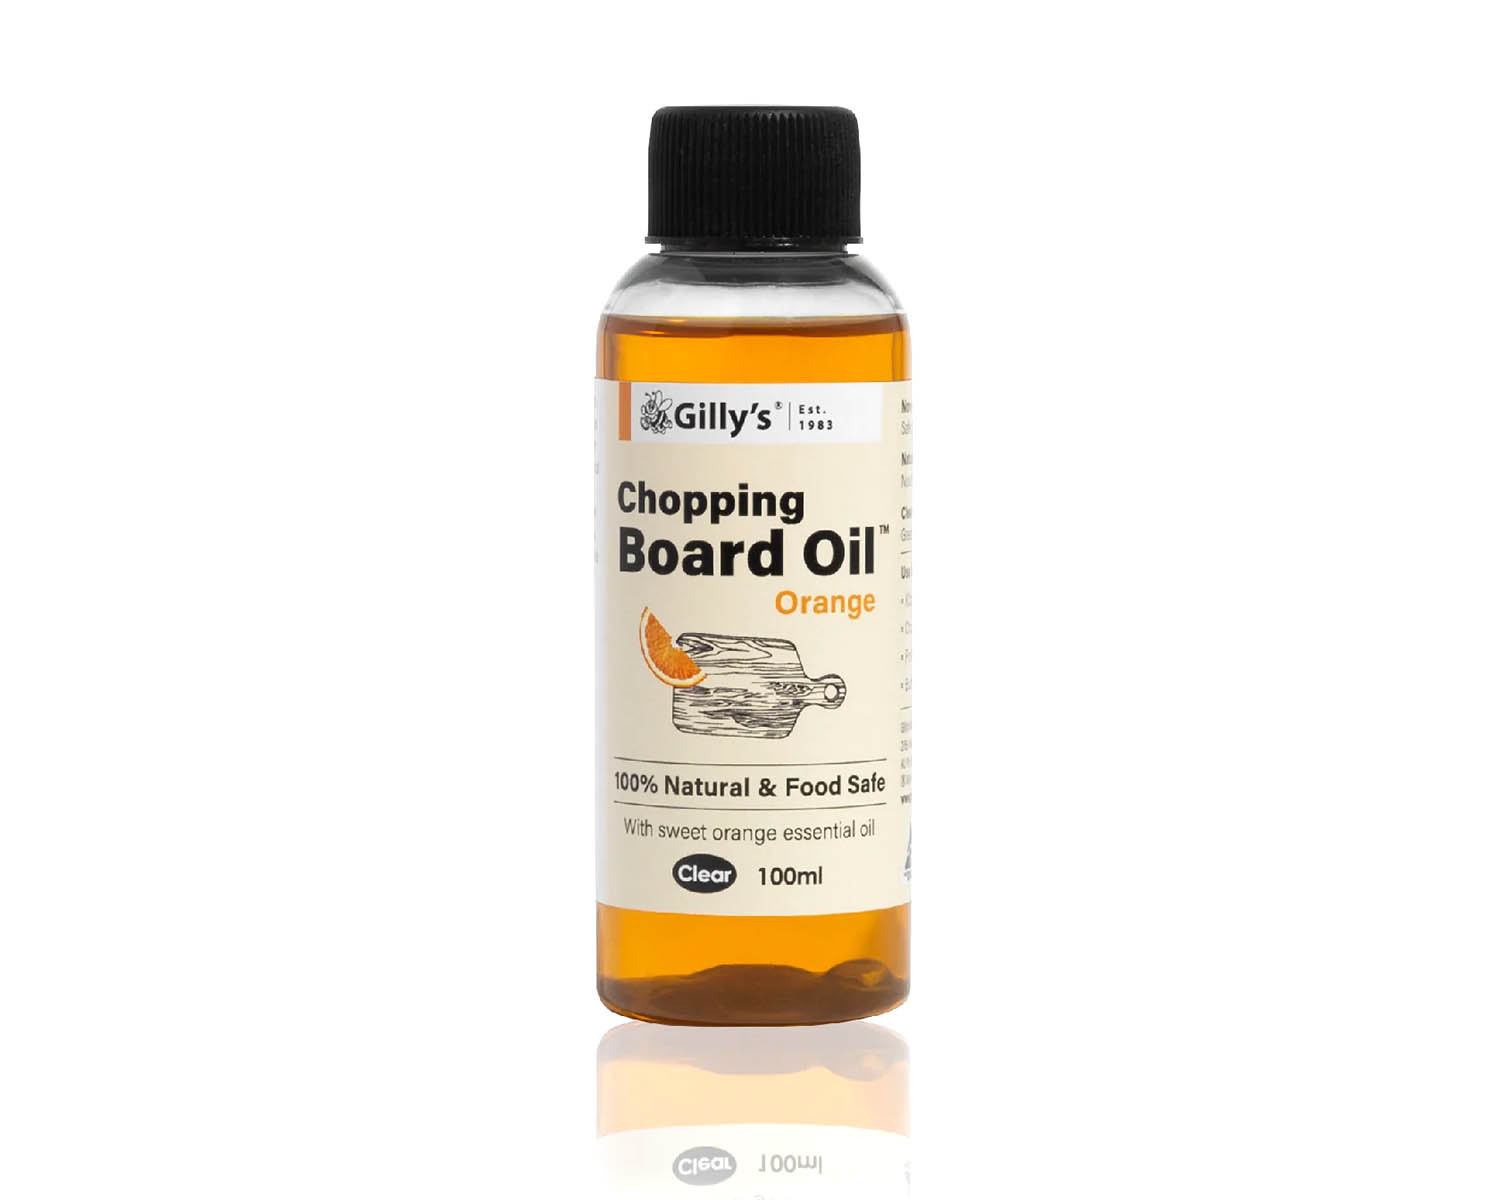 Chopping Board Oil - Orange Oil - Gilly's ®